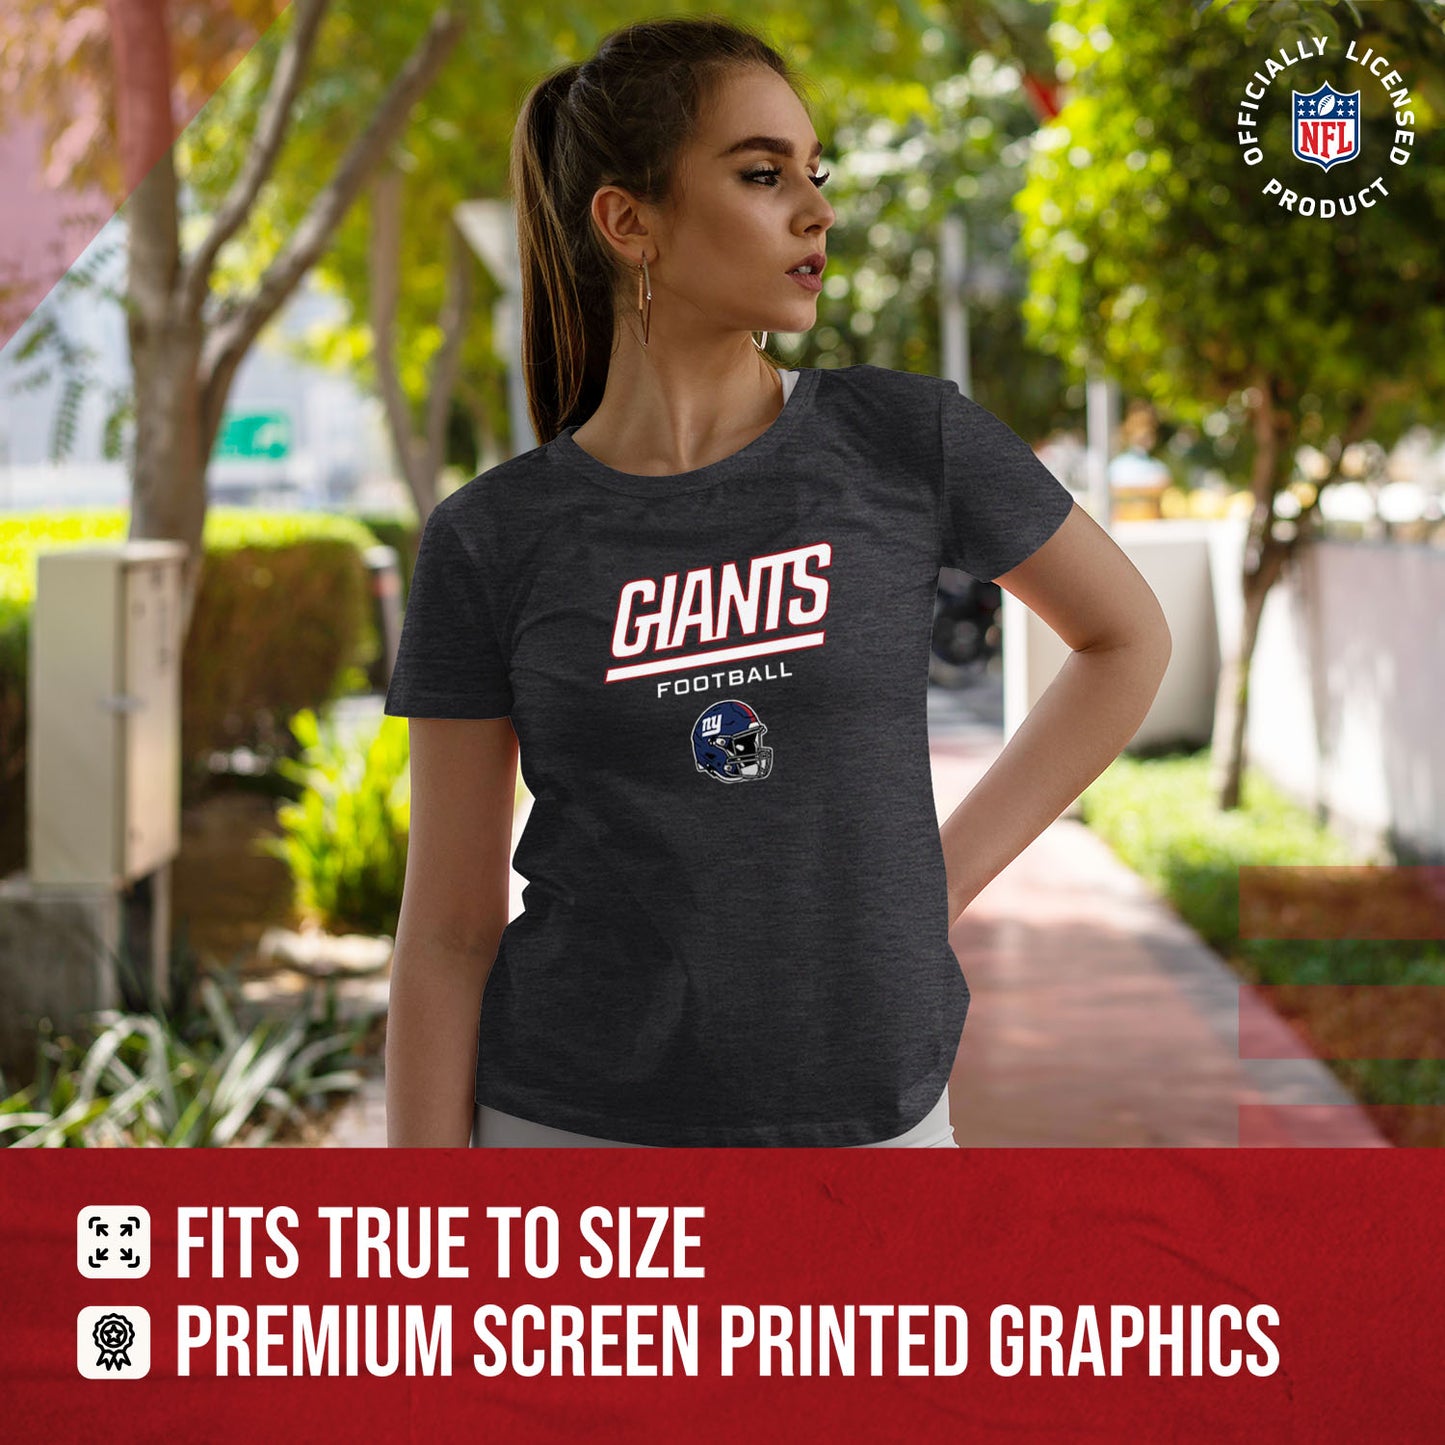 New York Giants Women's NFL Football Helmet Short Sleeve Tagless T-Shirt - Charcoal